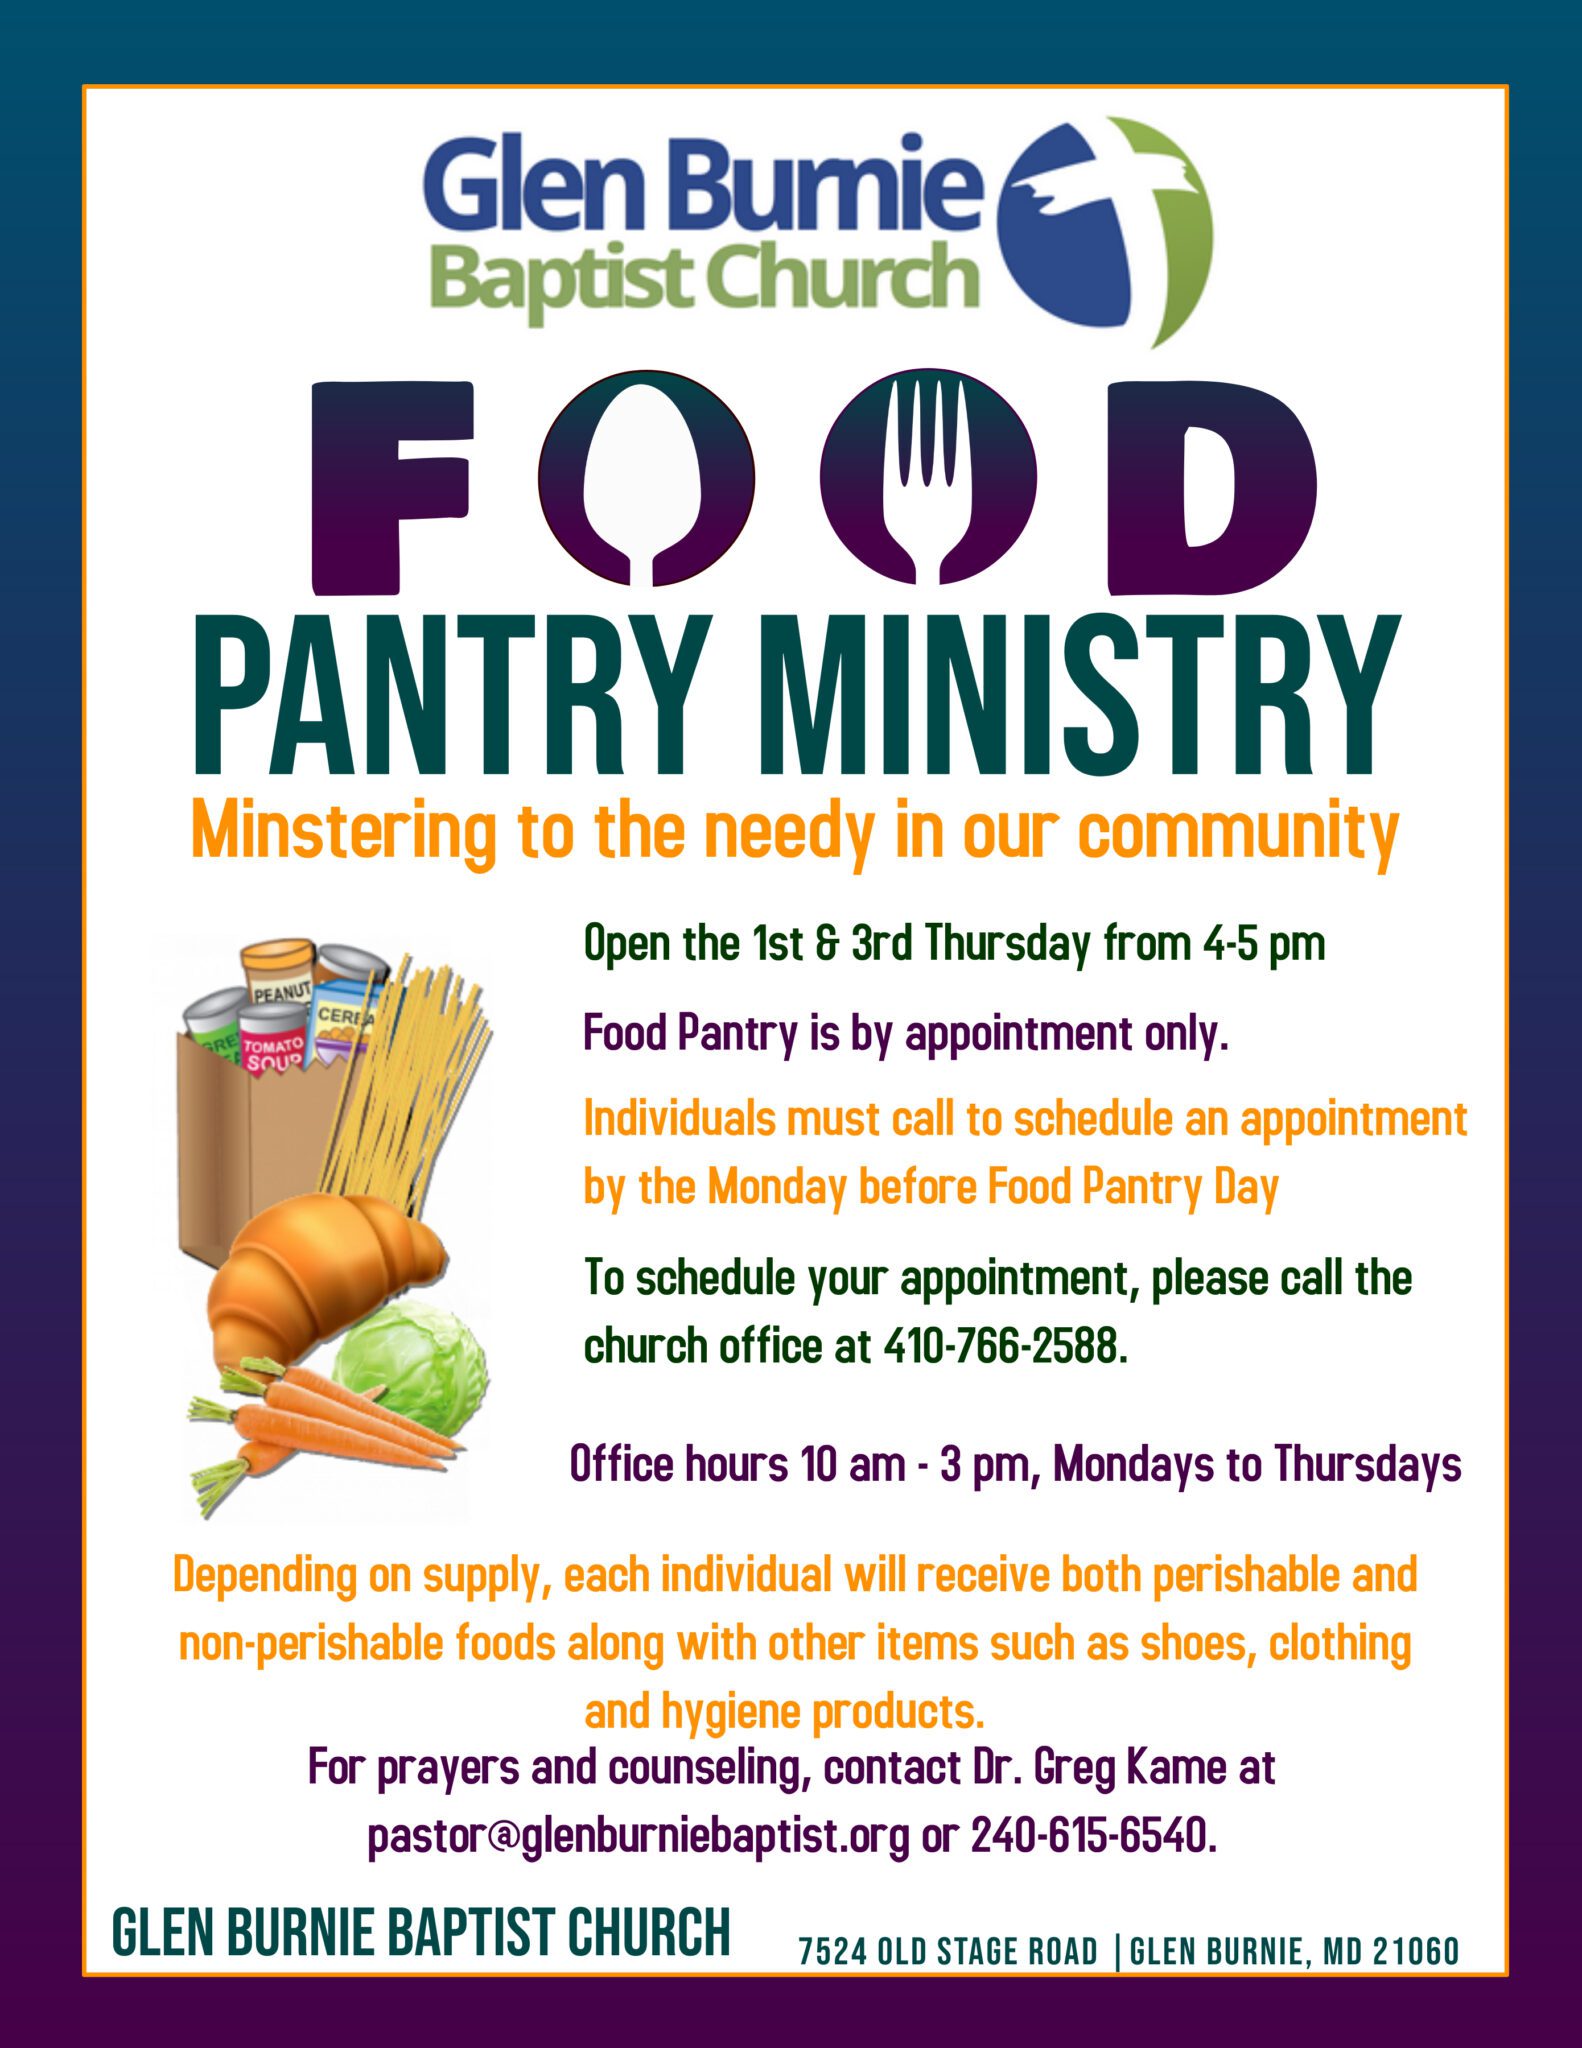 Food Pantry Ministry Glen Burnie Baptist Church